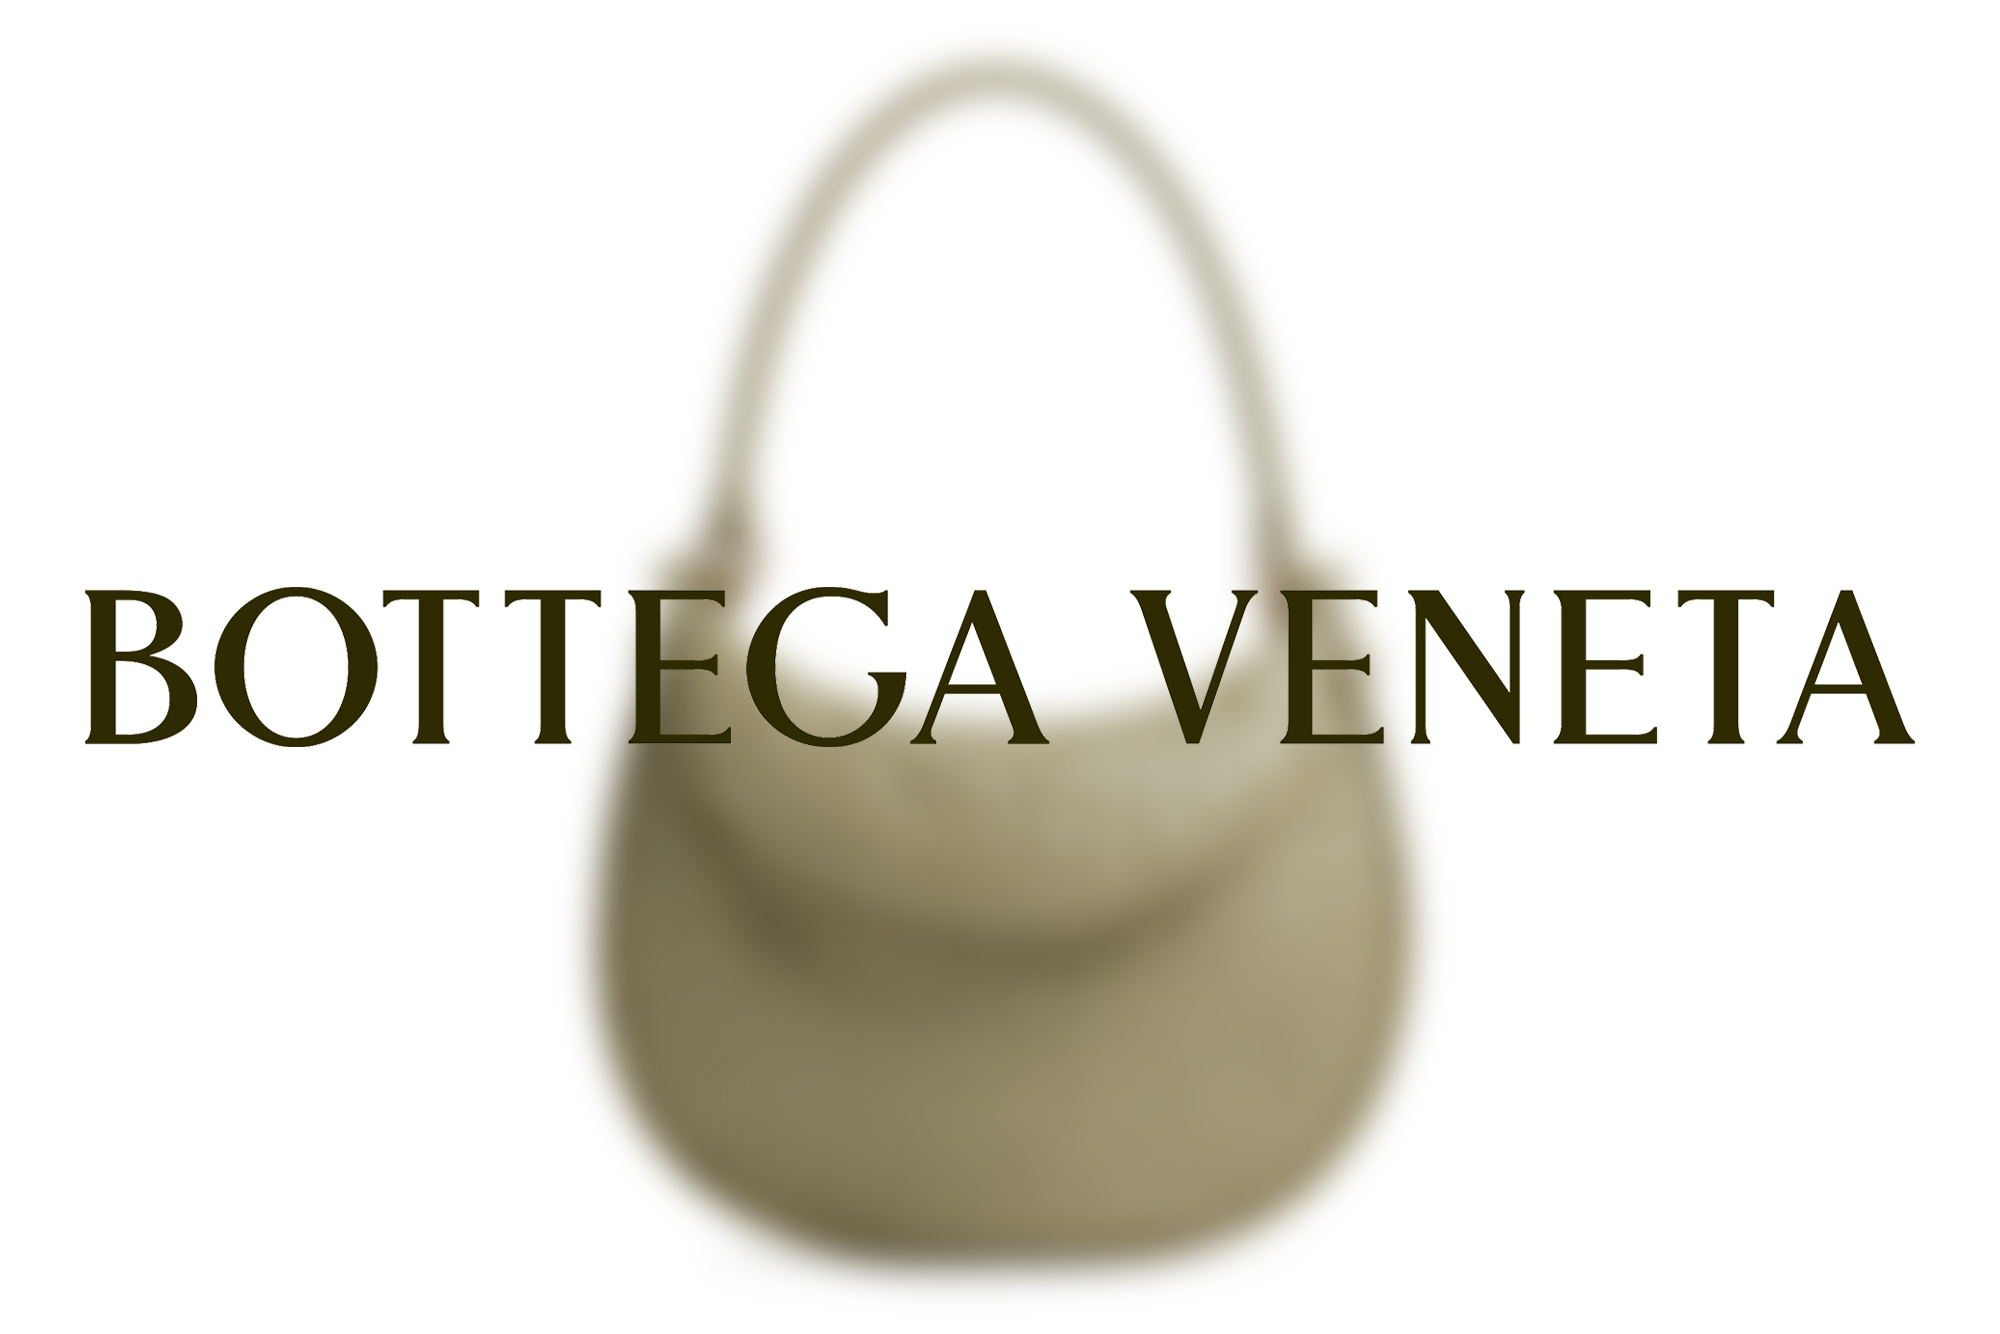 Bottega Veneta has released its new versatile Gemelli bag for Fall/Winter 2023.